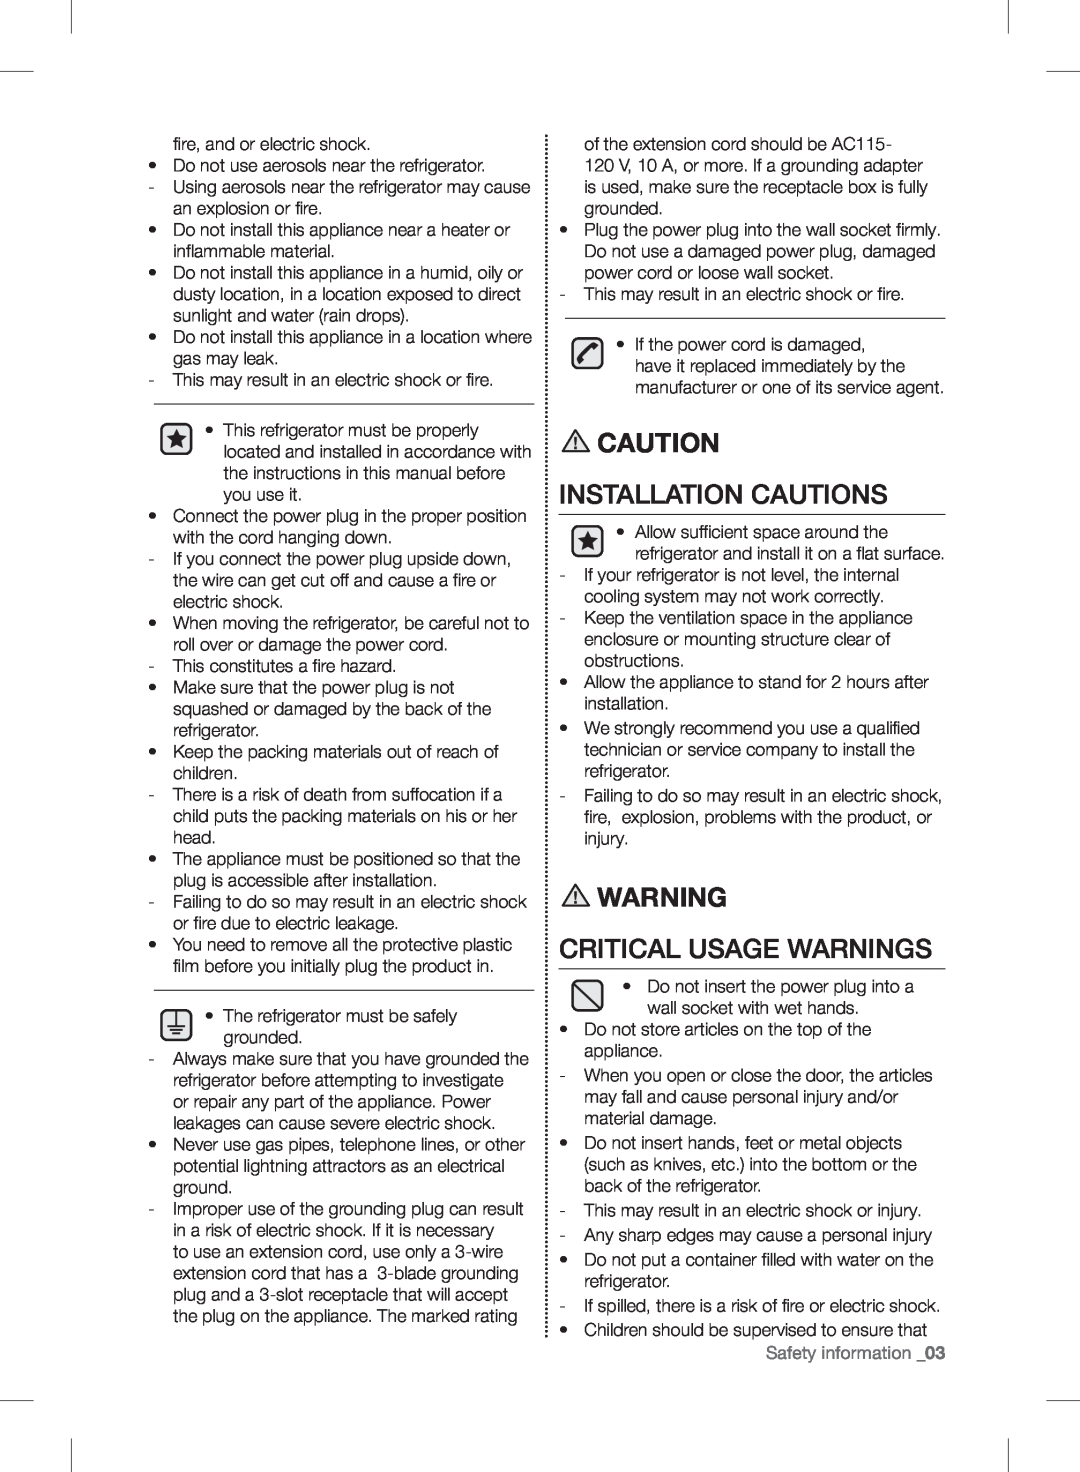 Samsung RF24FSEDBSR user manual Installation Cautions, Critical Usage Warnings 